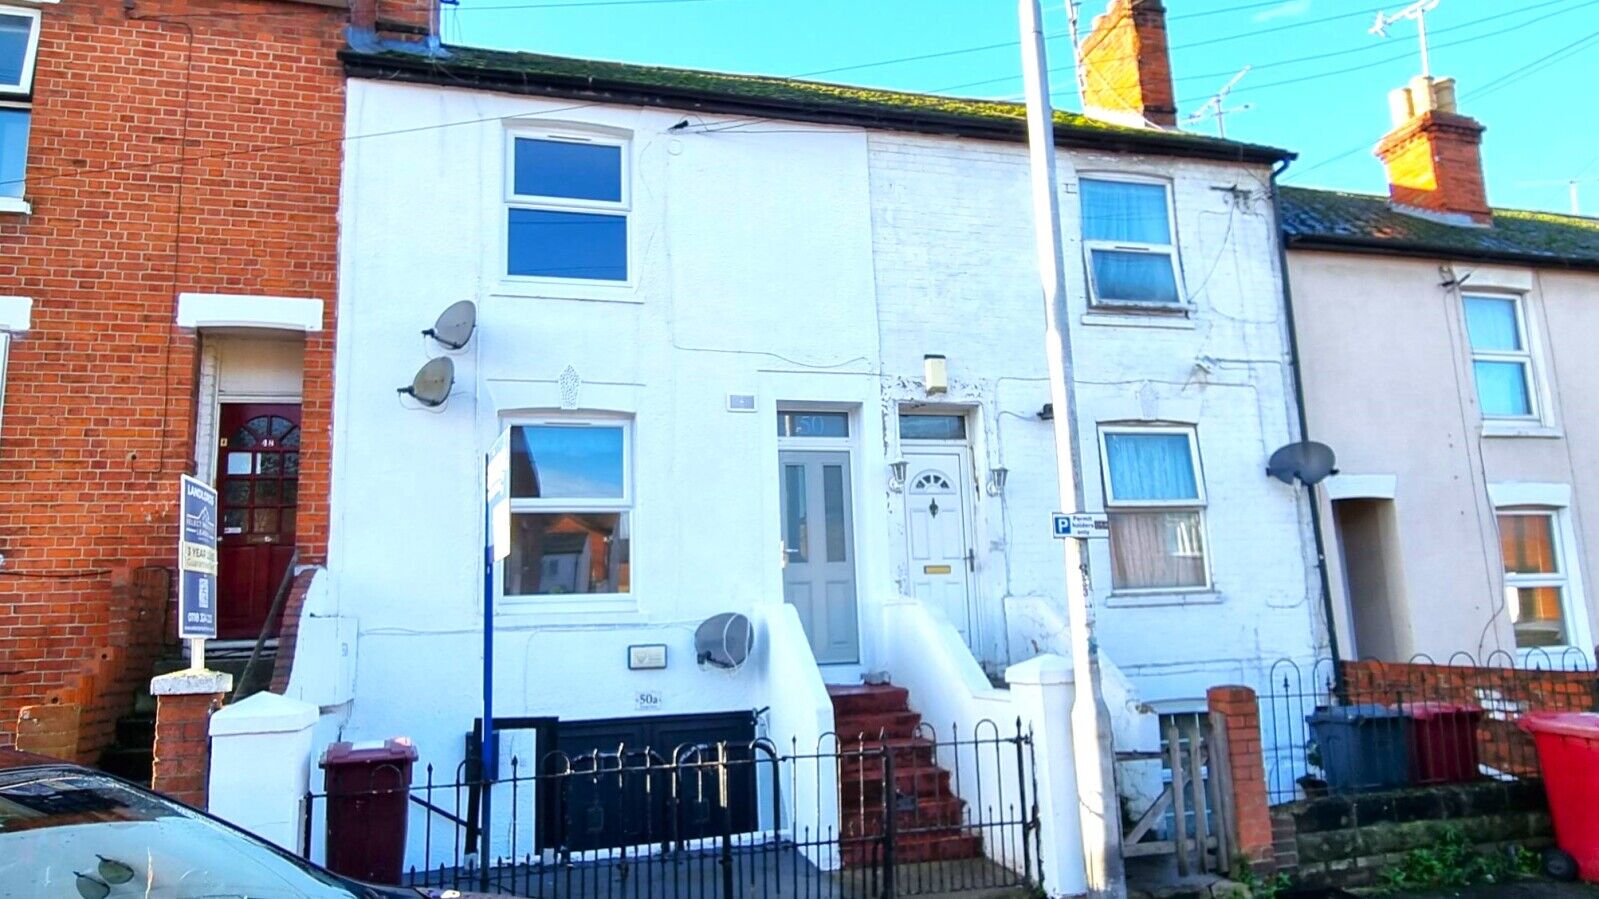 2 bedroom mid terraced flat for sale George Street, Reading, RG1, main image